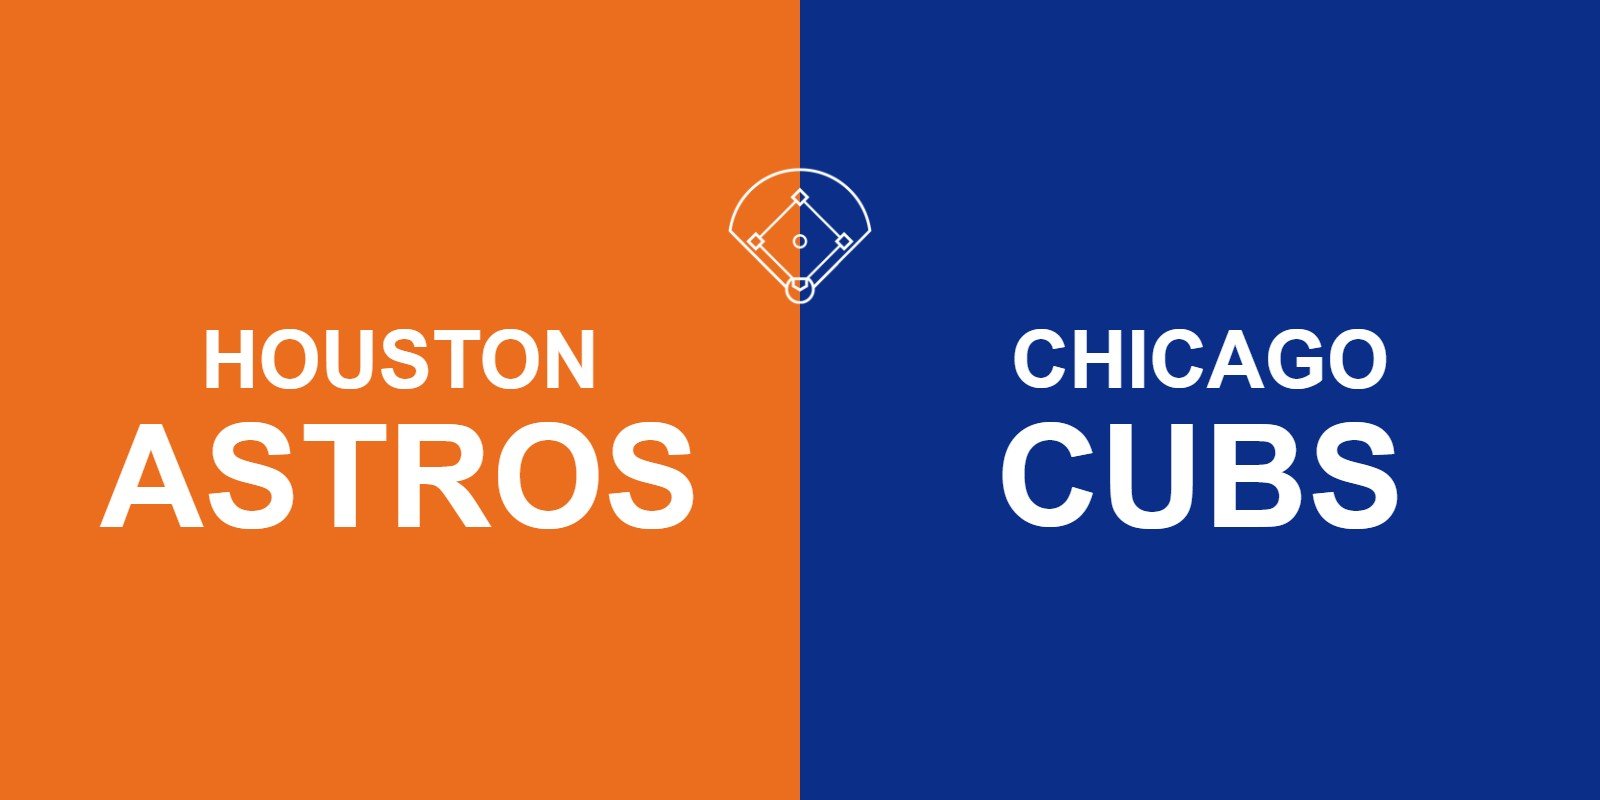 Astros vs Cubs Tickets